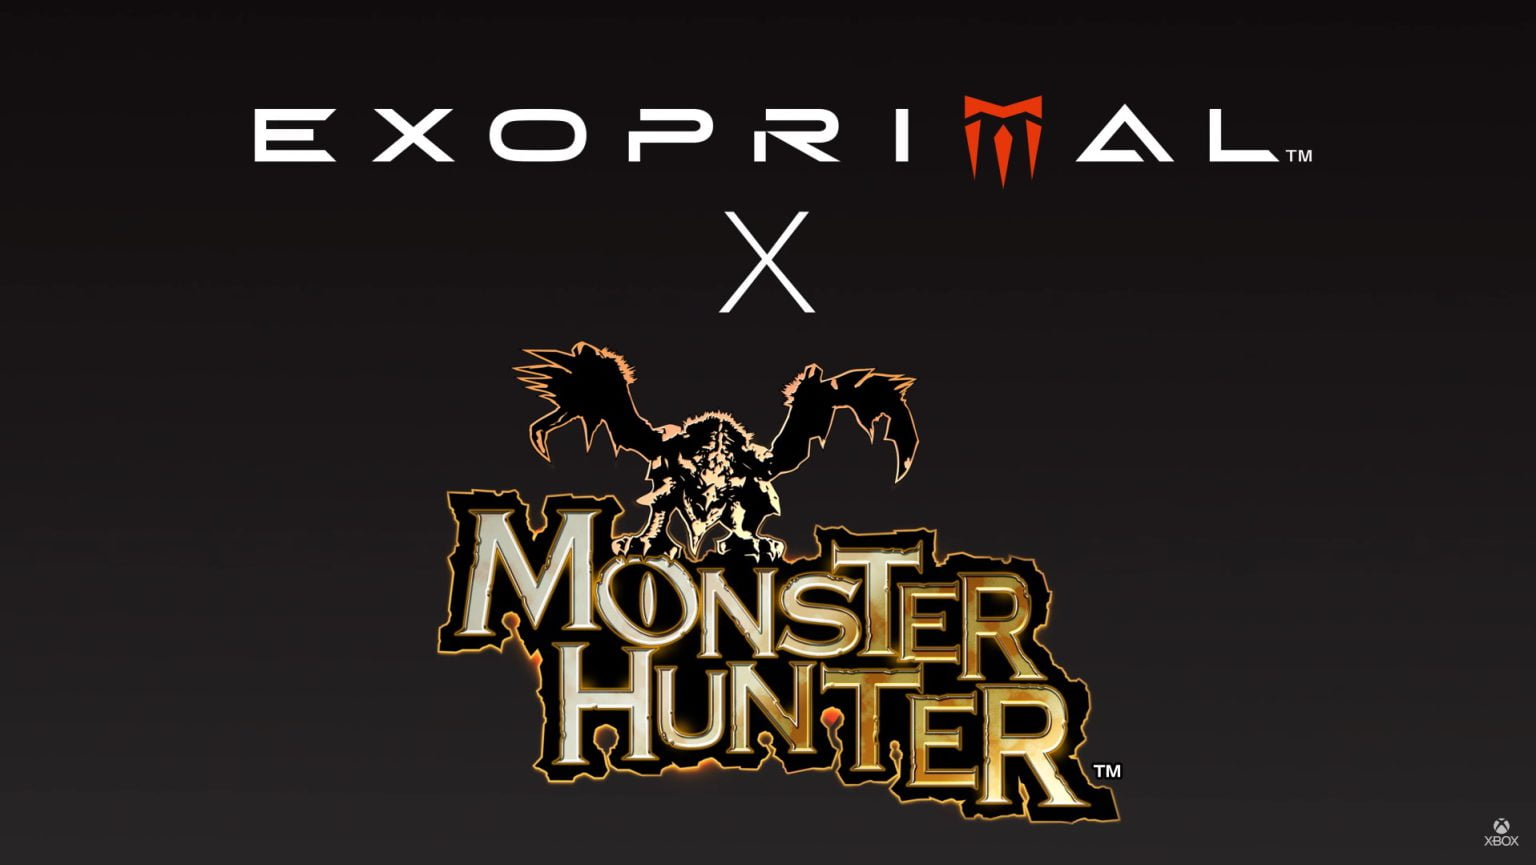 Exoprimal x Monster Hunter event